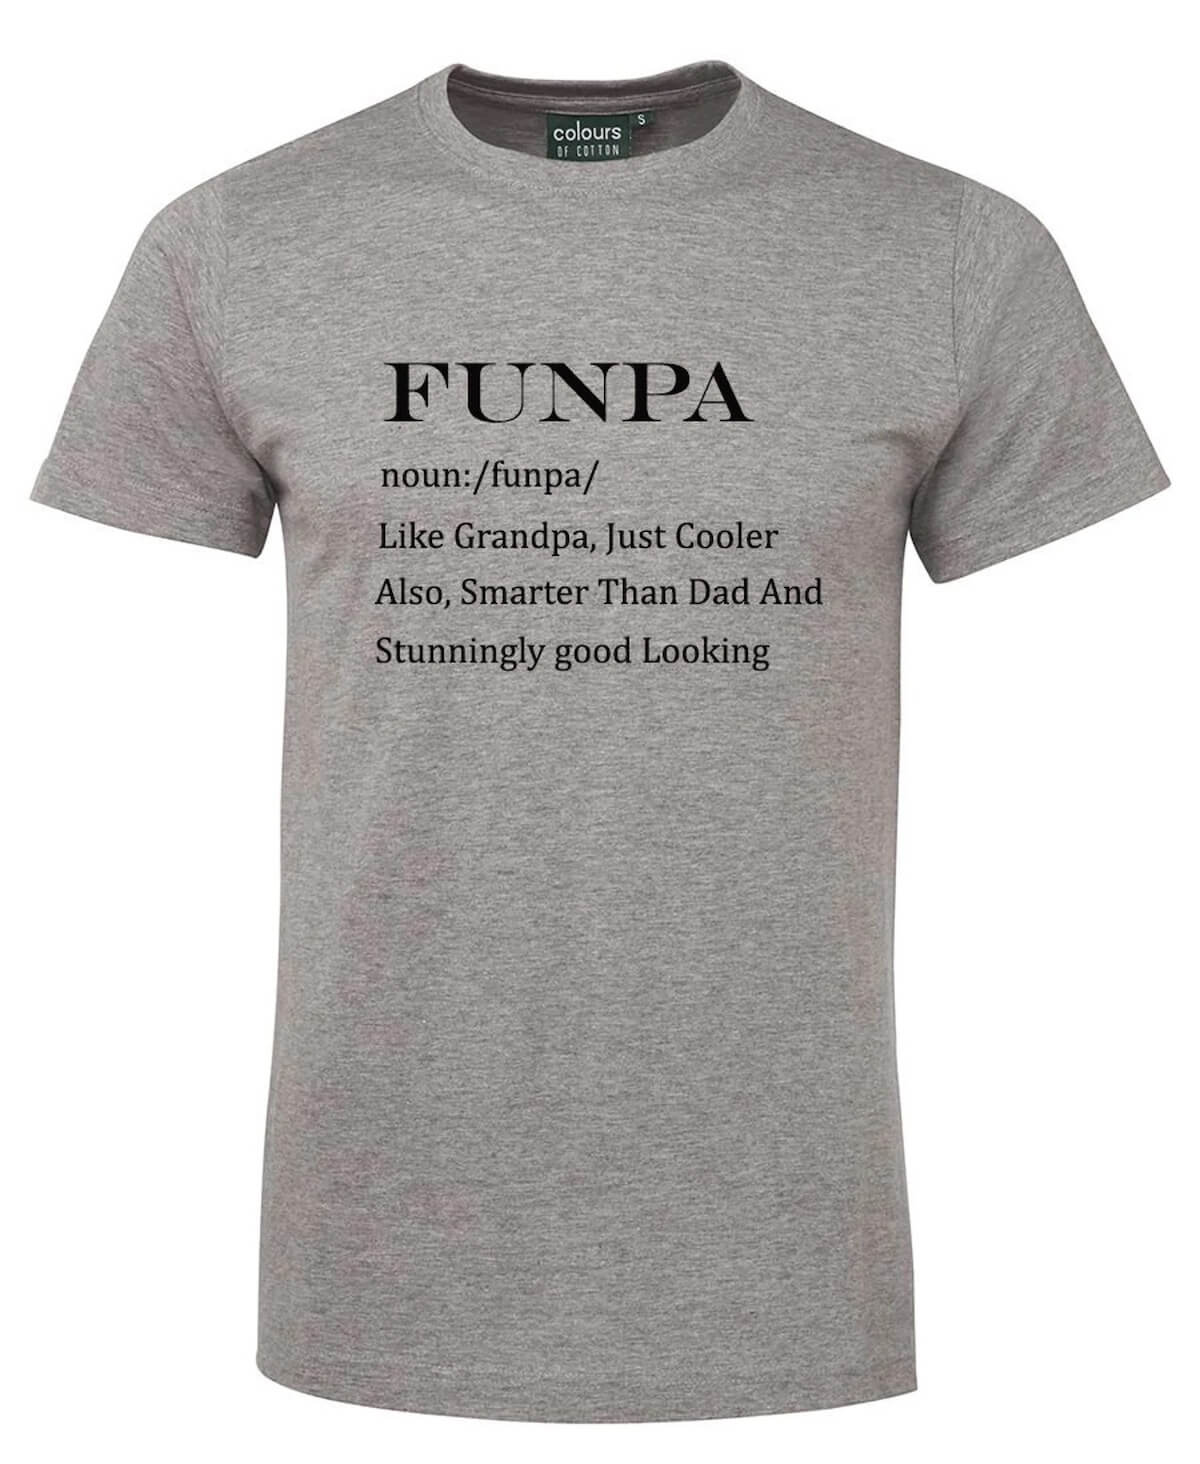 Funpa novelty grandfather tshirt gift